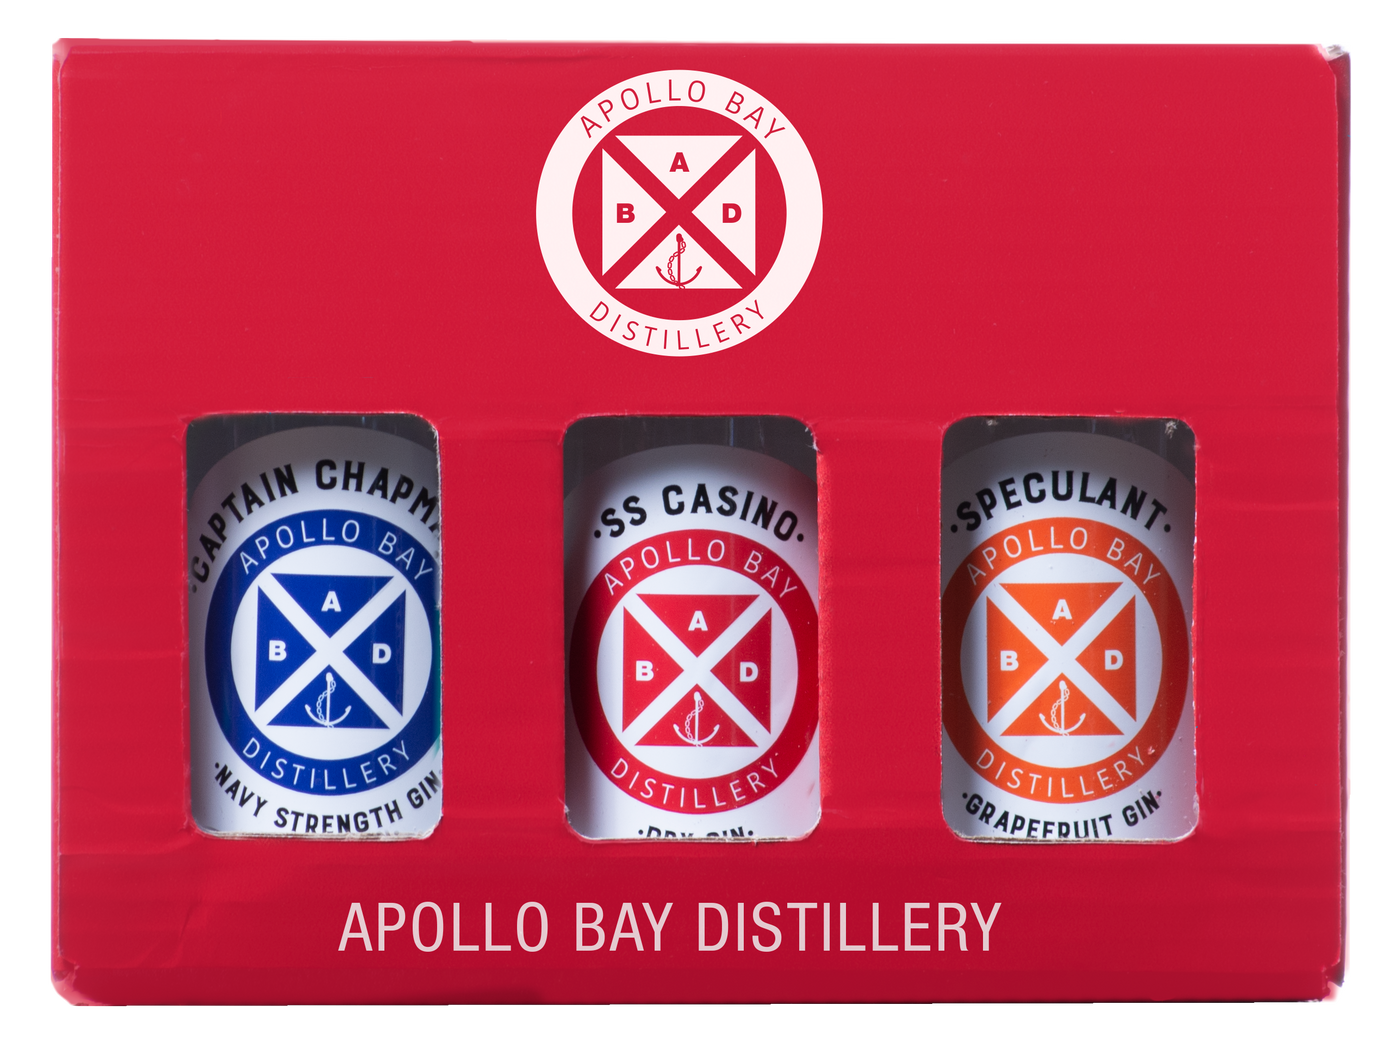 Apollo Bay Distillery Gift Pack Navy